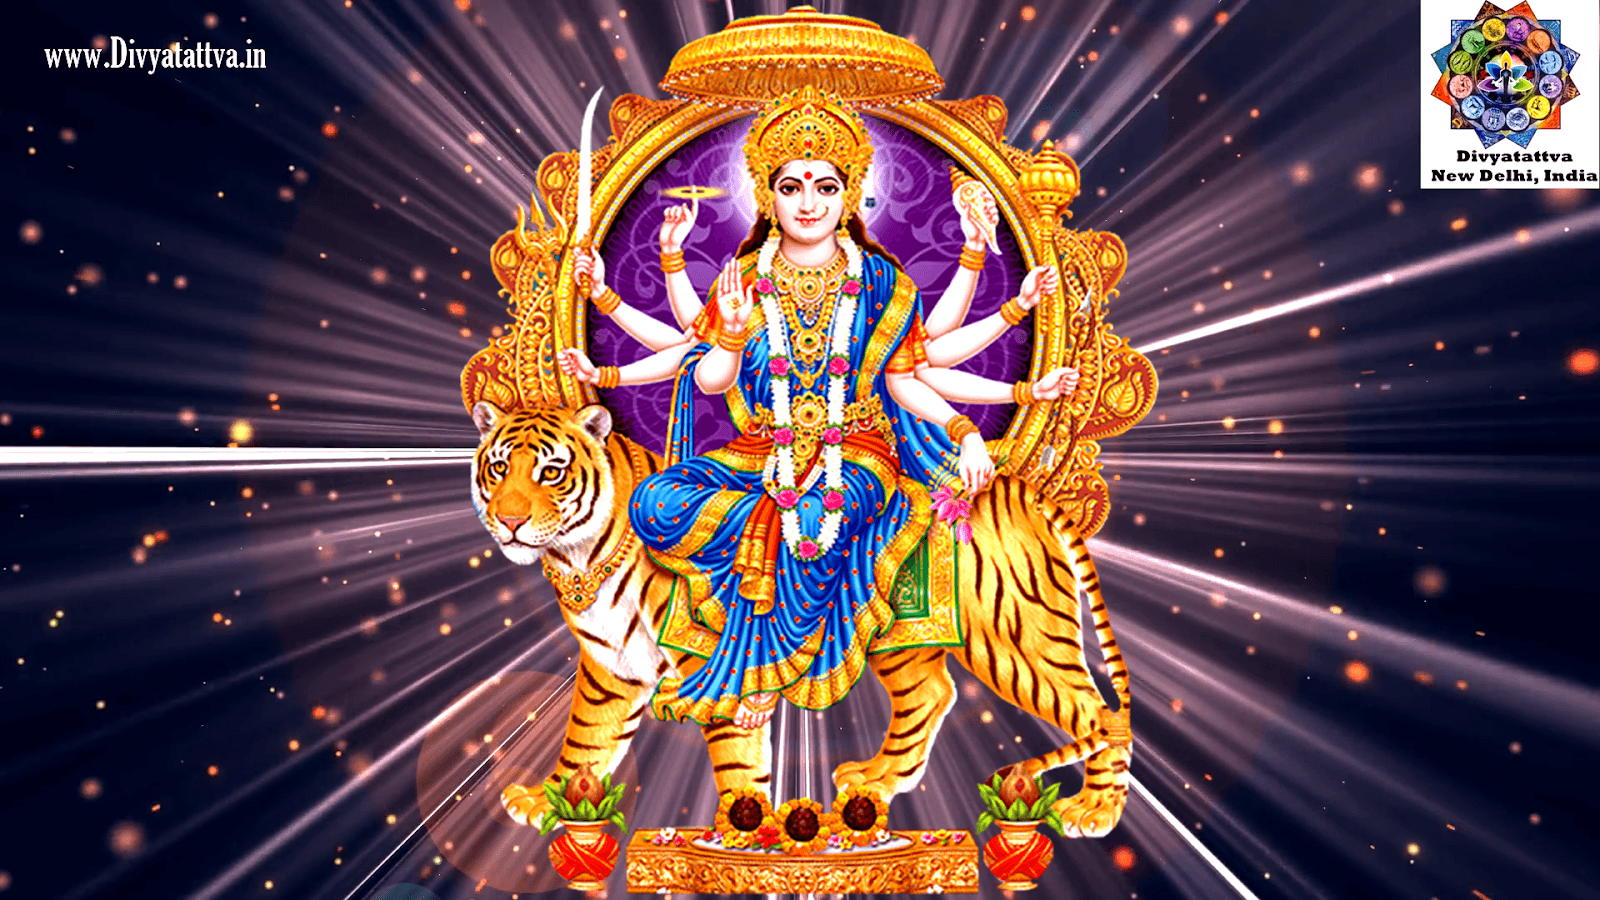 Maa Durga HD Wallpaper, Goddess Durga Image, Devi Durga